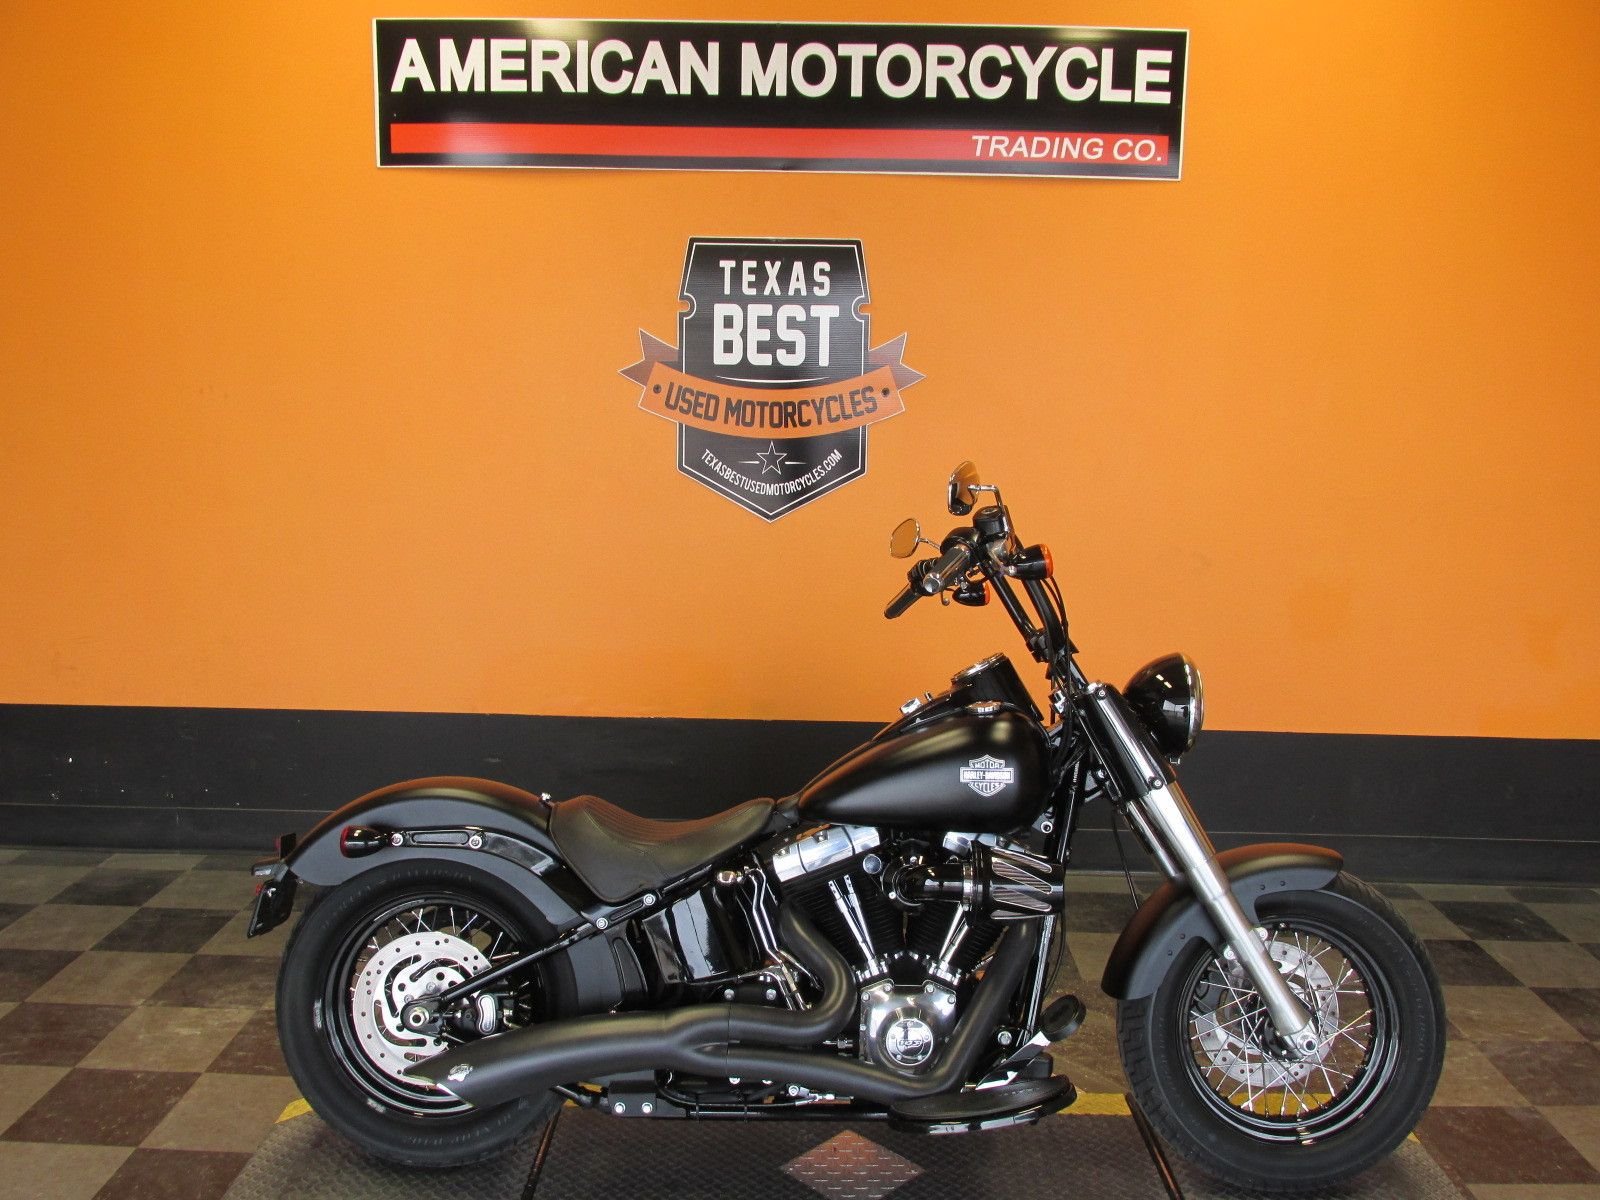 2013 Harley Davidson Softail Slim American Motorcycle Trading Company Used Harley Davidson Motorcycles